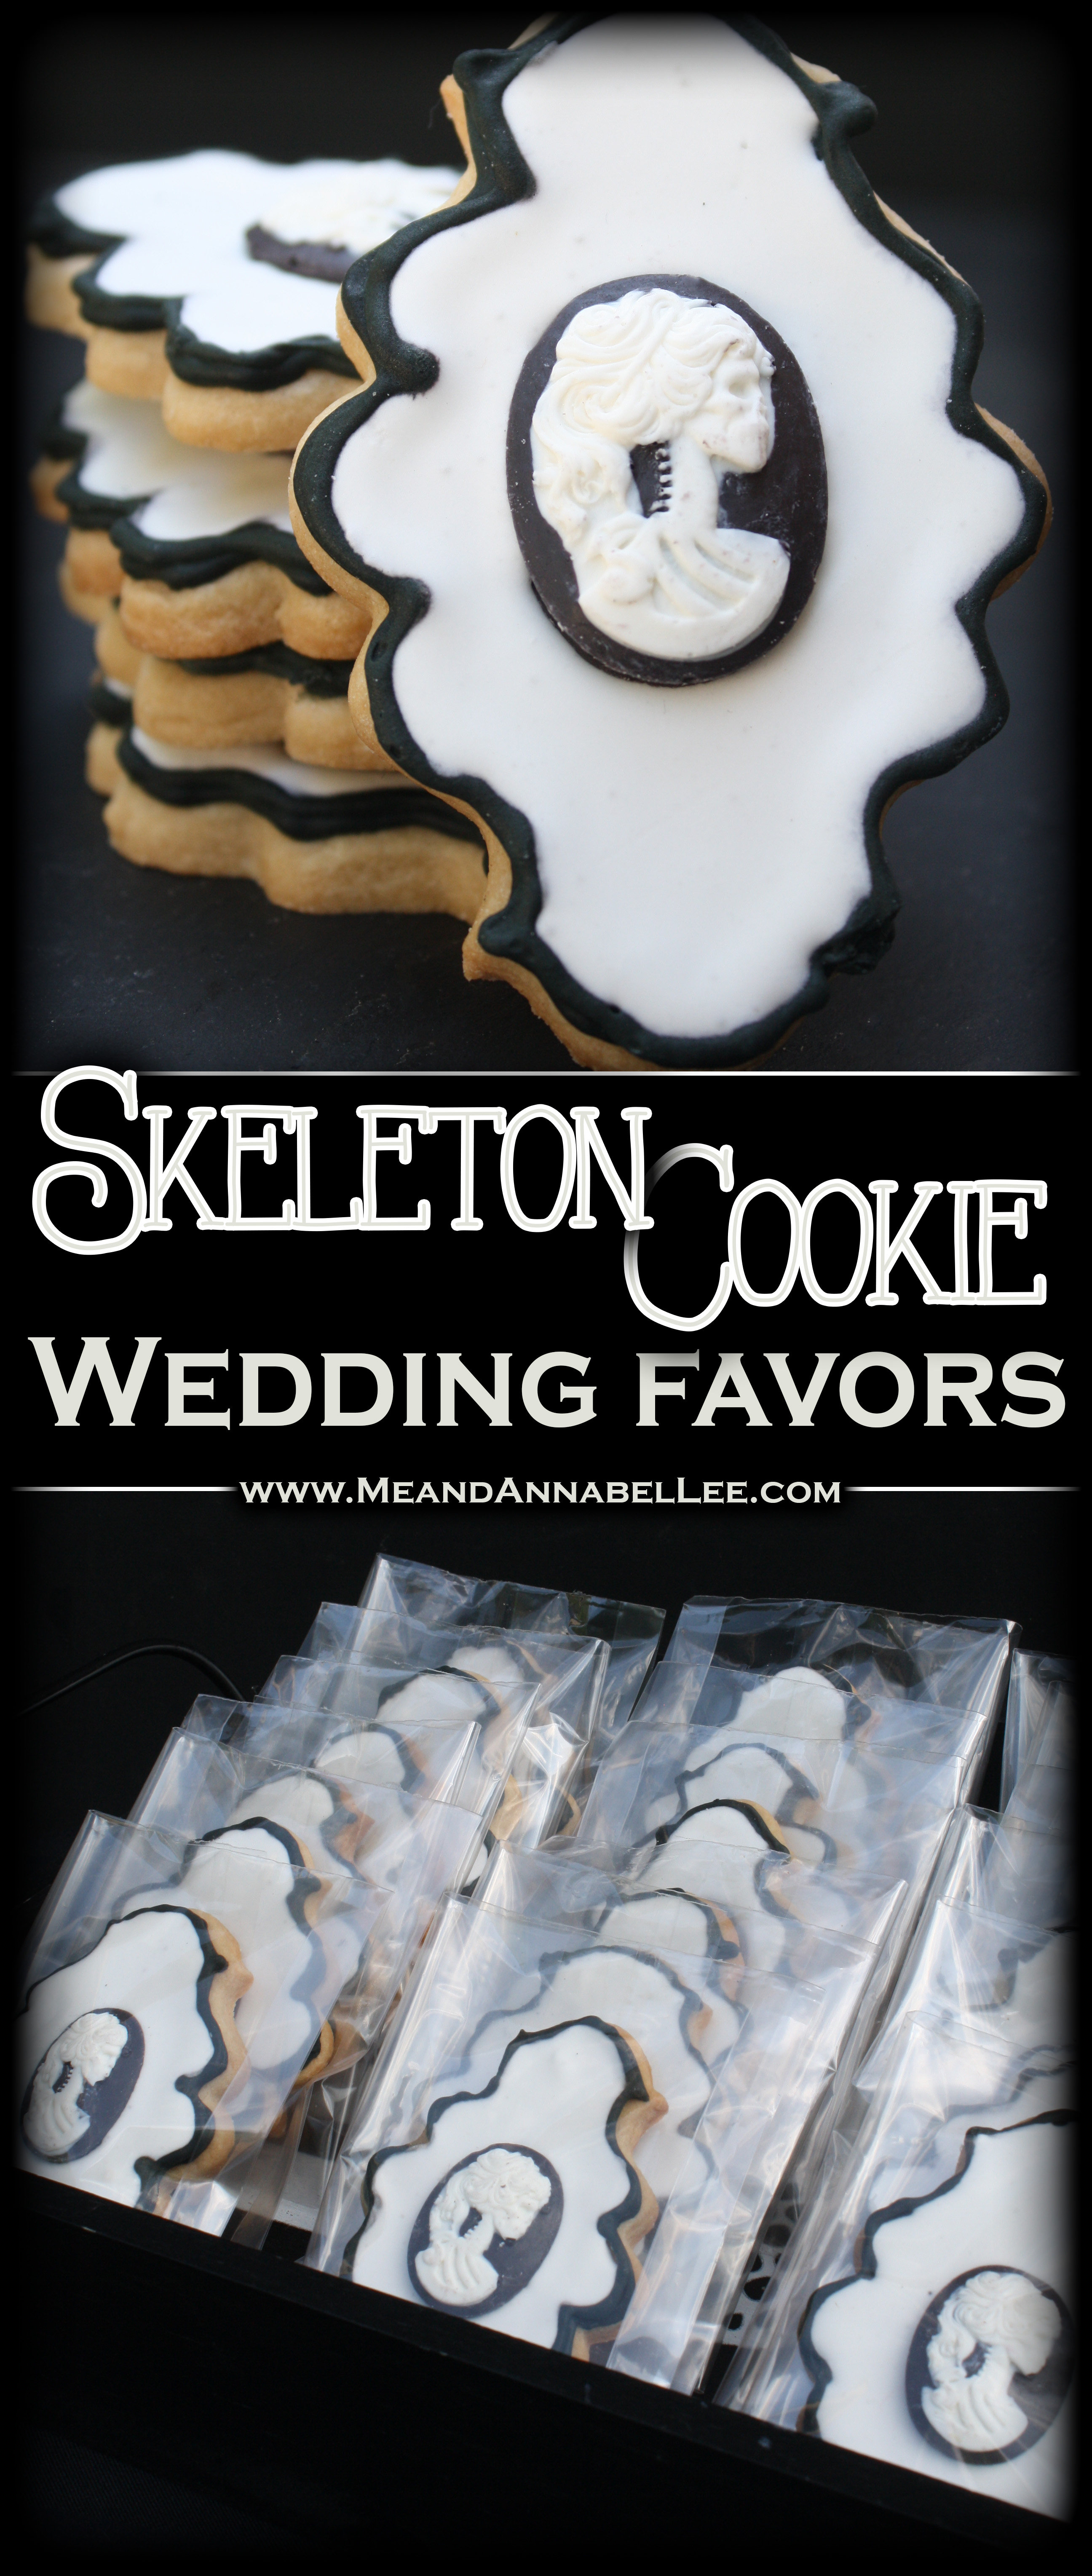 Victorian Gothic Skeleton Cameo Cookies | Edible Wedding Favors | Black & White | Halloween Wedding | Almond Vanilla Sugar Cookies | Chocolate Cameo | Royal Icing | www.MeandAnnabelLee.com